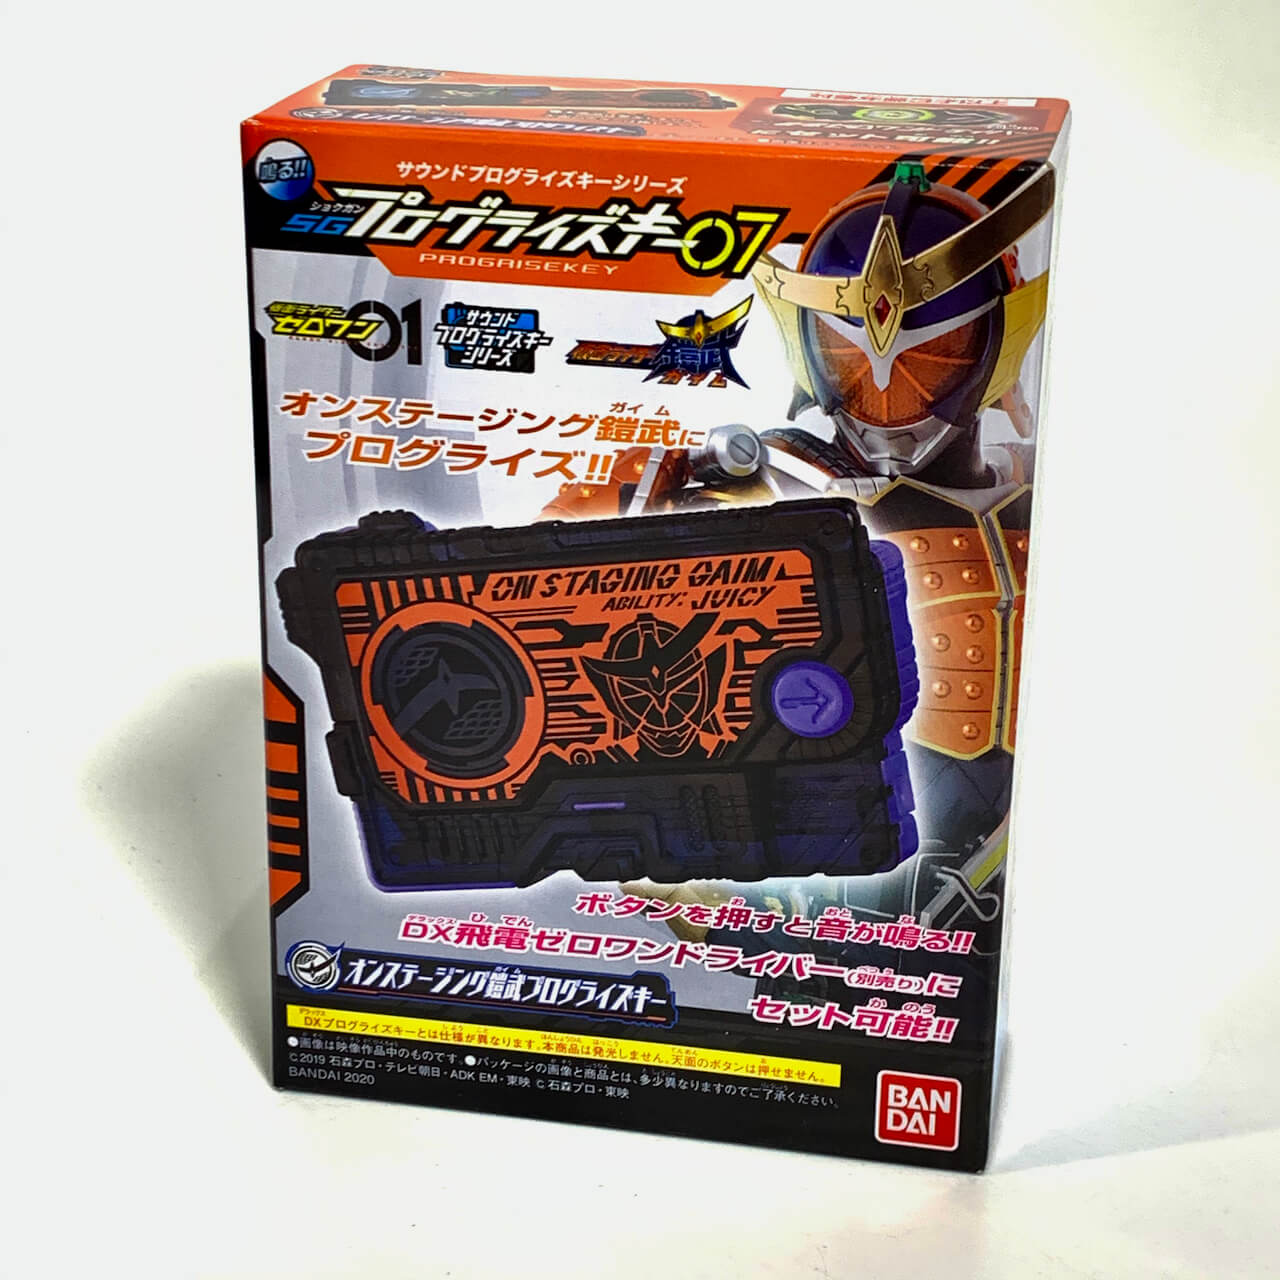 Kamen Rider 01: Candy Toy SG Progrise Key 07 - 02. On Staging Gaim Progrise Key | CSTOYS INTERNATIONAL